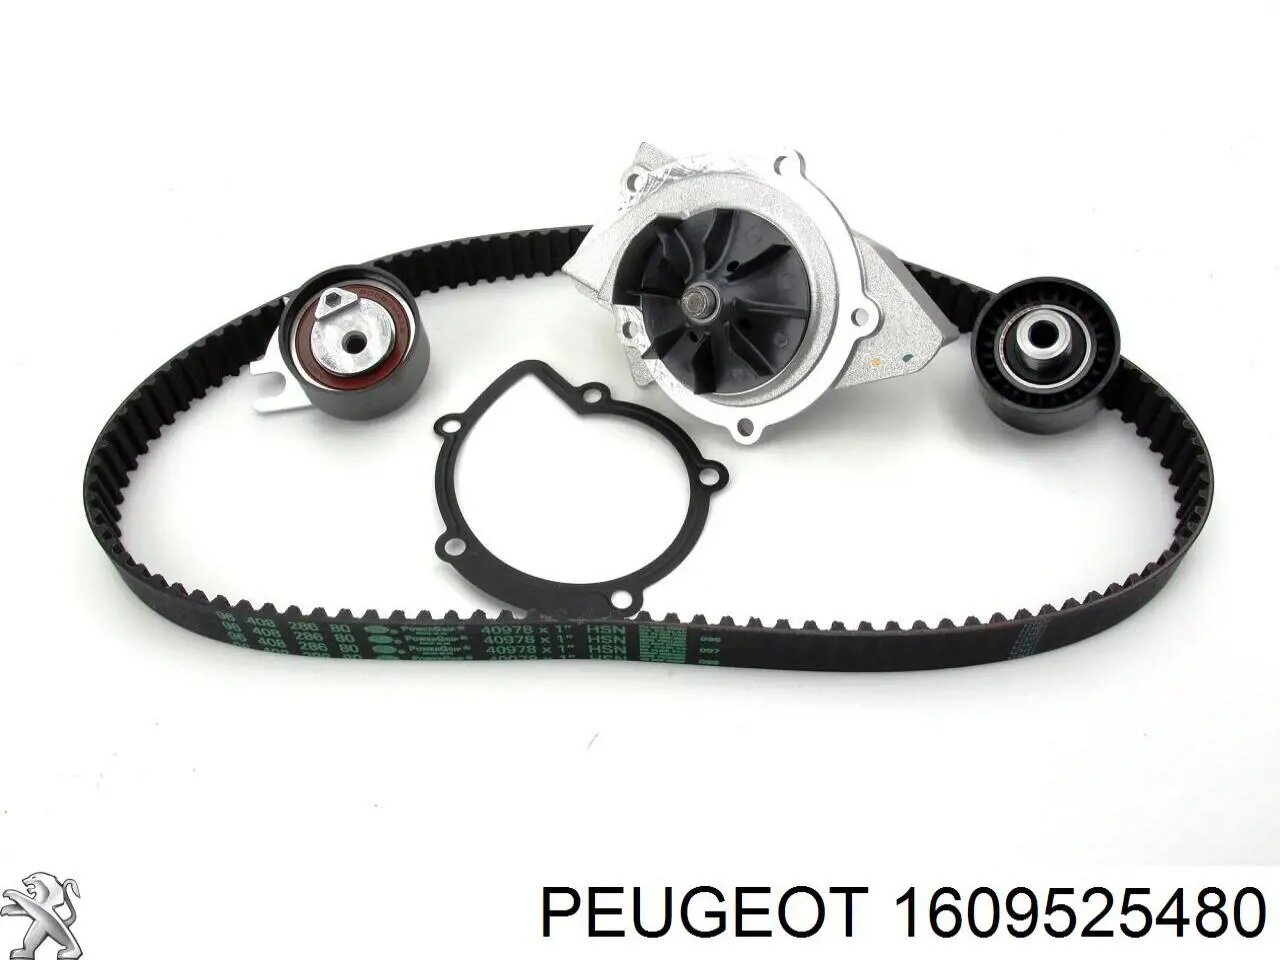 1609525480 Peugeot/Citroen kit de correa de distribución